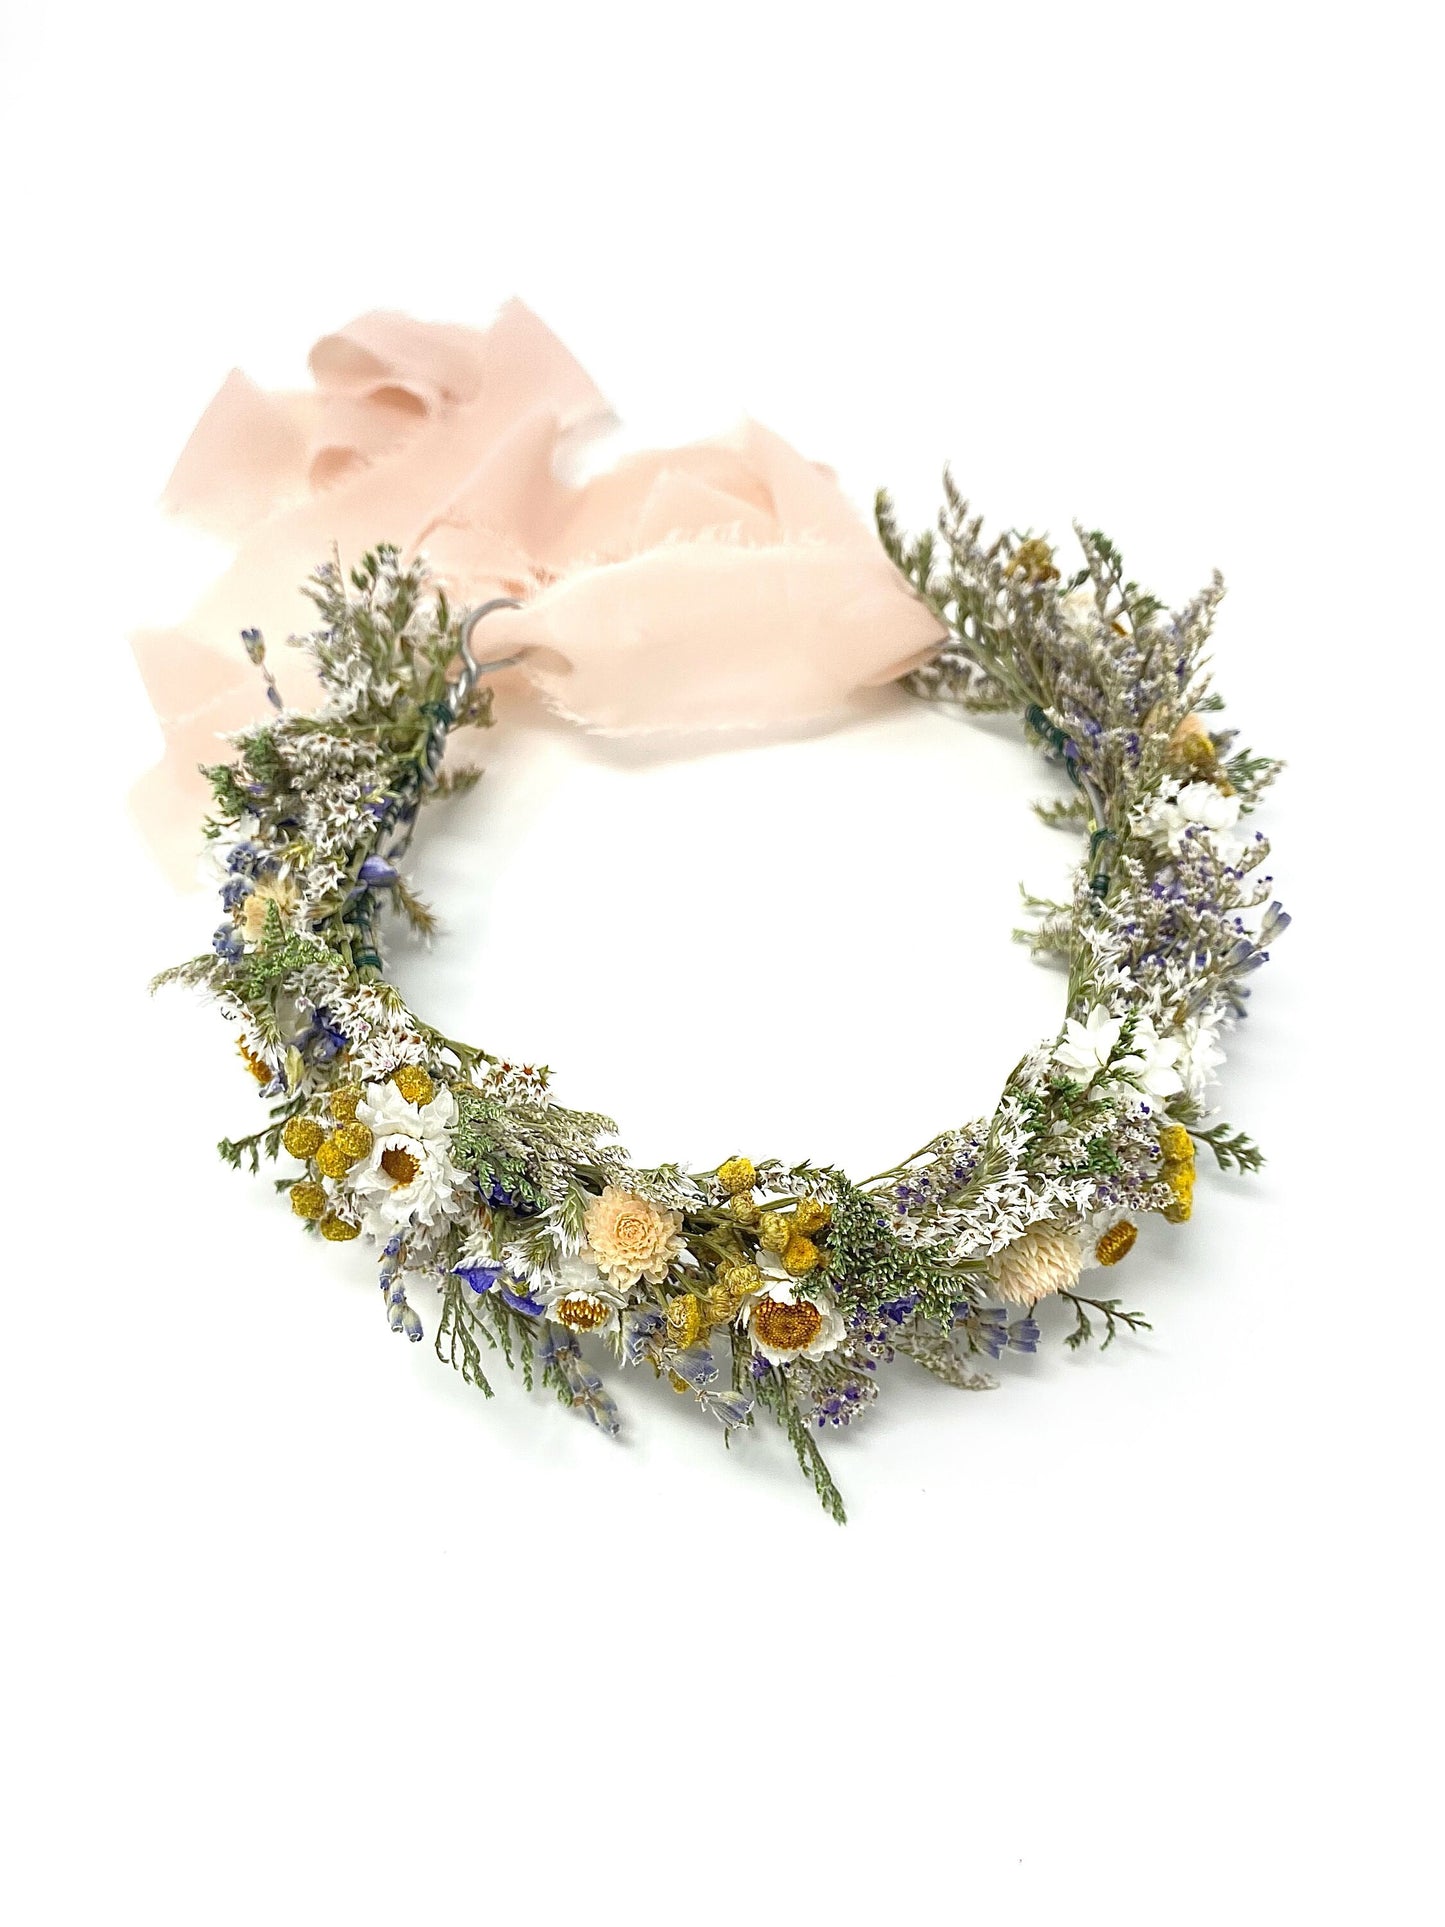 Wedding Head Wreath, Hair Accessory, Halo, Boho, Wild Flower, Floral, Dried Flowers, Simple, Rustic, Preserved, Ammobium, German Statice